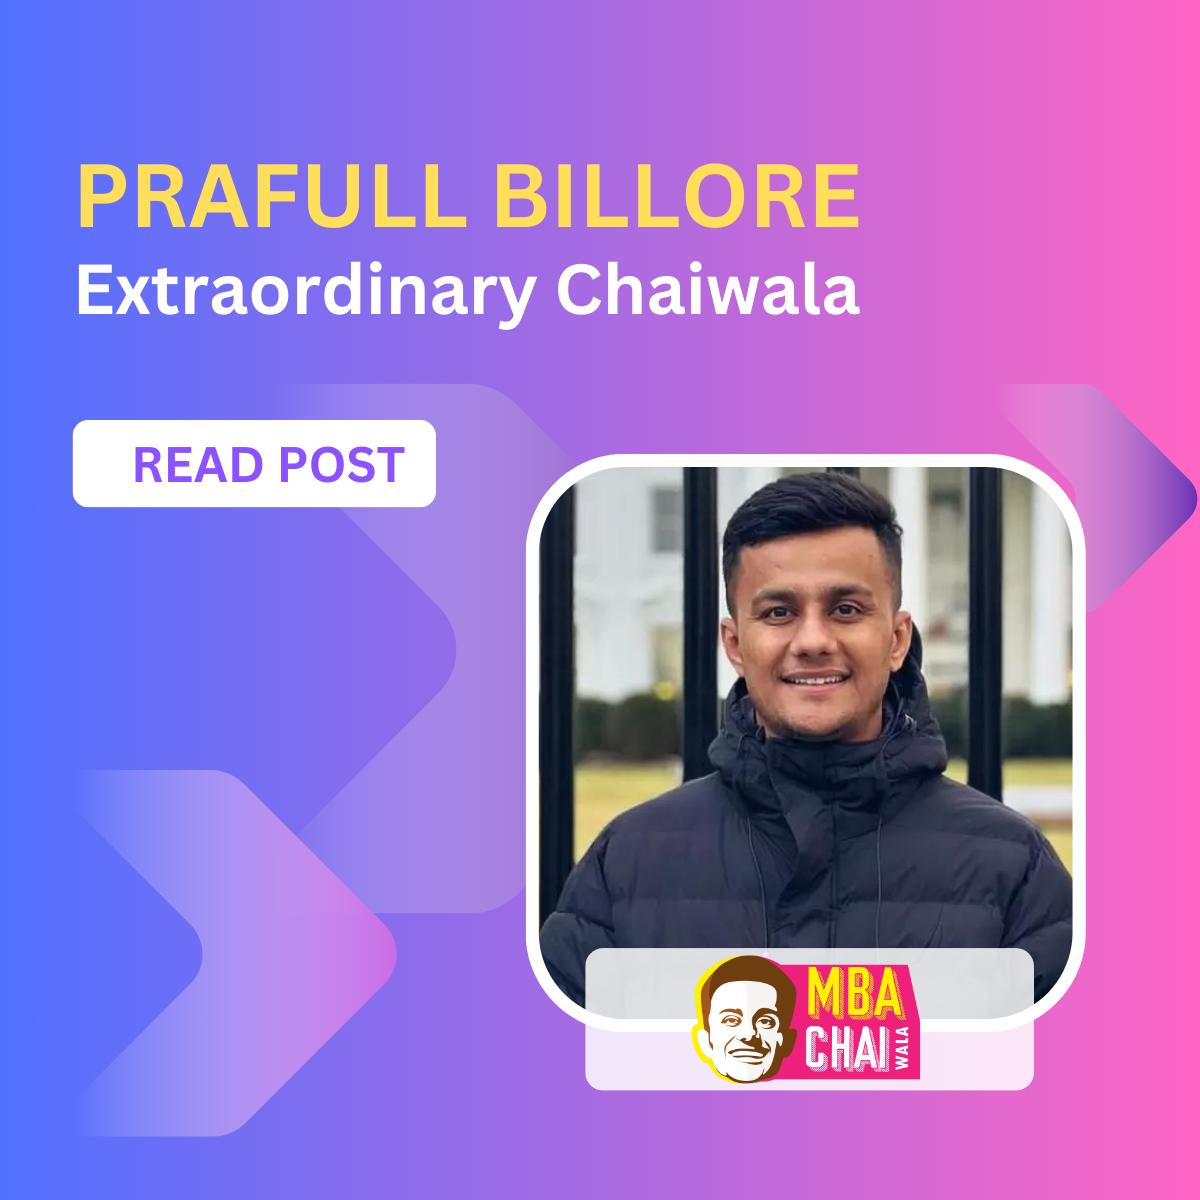 Prafull Billore the man behind the flourishing brand MBA Chaiwala